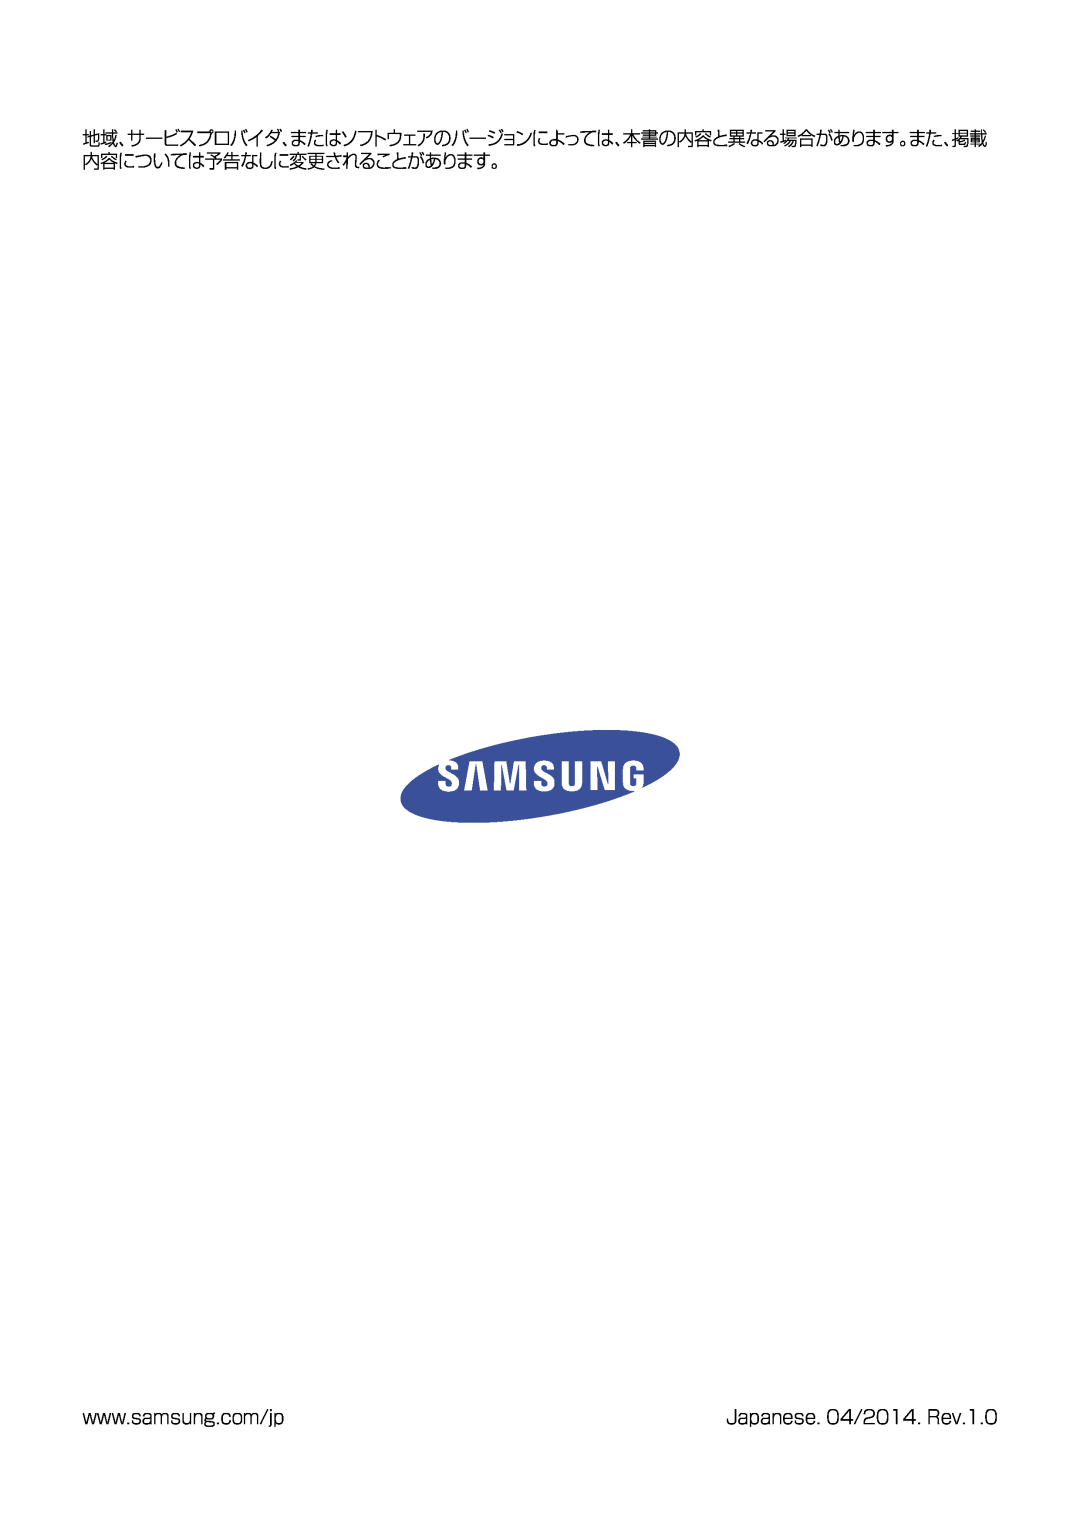 Samsung SM-R3500ZKAXJP, SM-R3500ZKADCM, SM-R3500ZKAKDI, SM-R3500ZKAEUX manual Japanese. 04/2014. Rev.1.0 